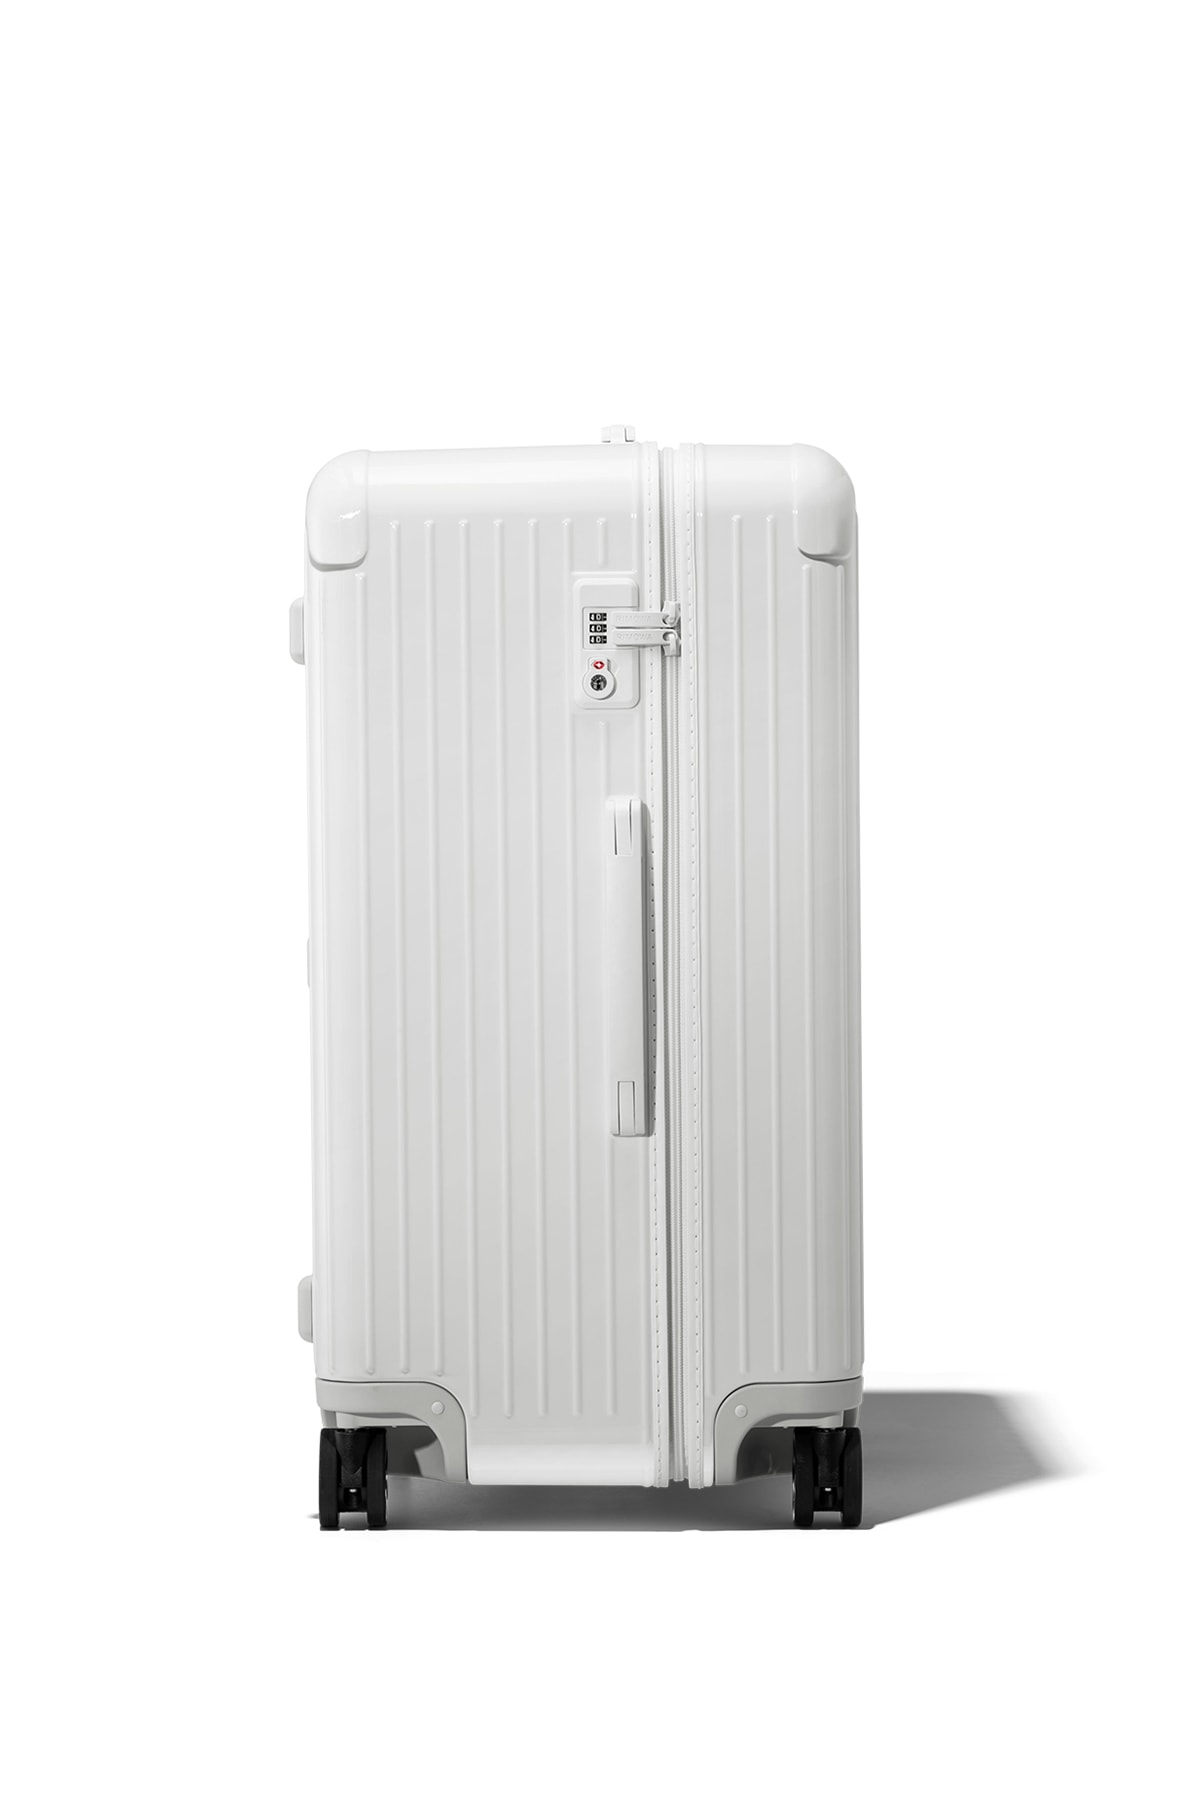 rimowa aluminum luggage redesign suitcases  Essential polycarbonate LITE original model drop release info logo june 5 2018